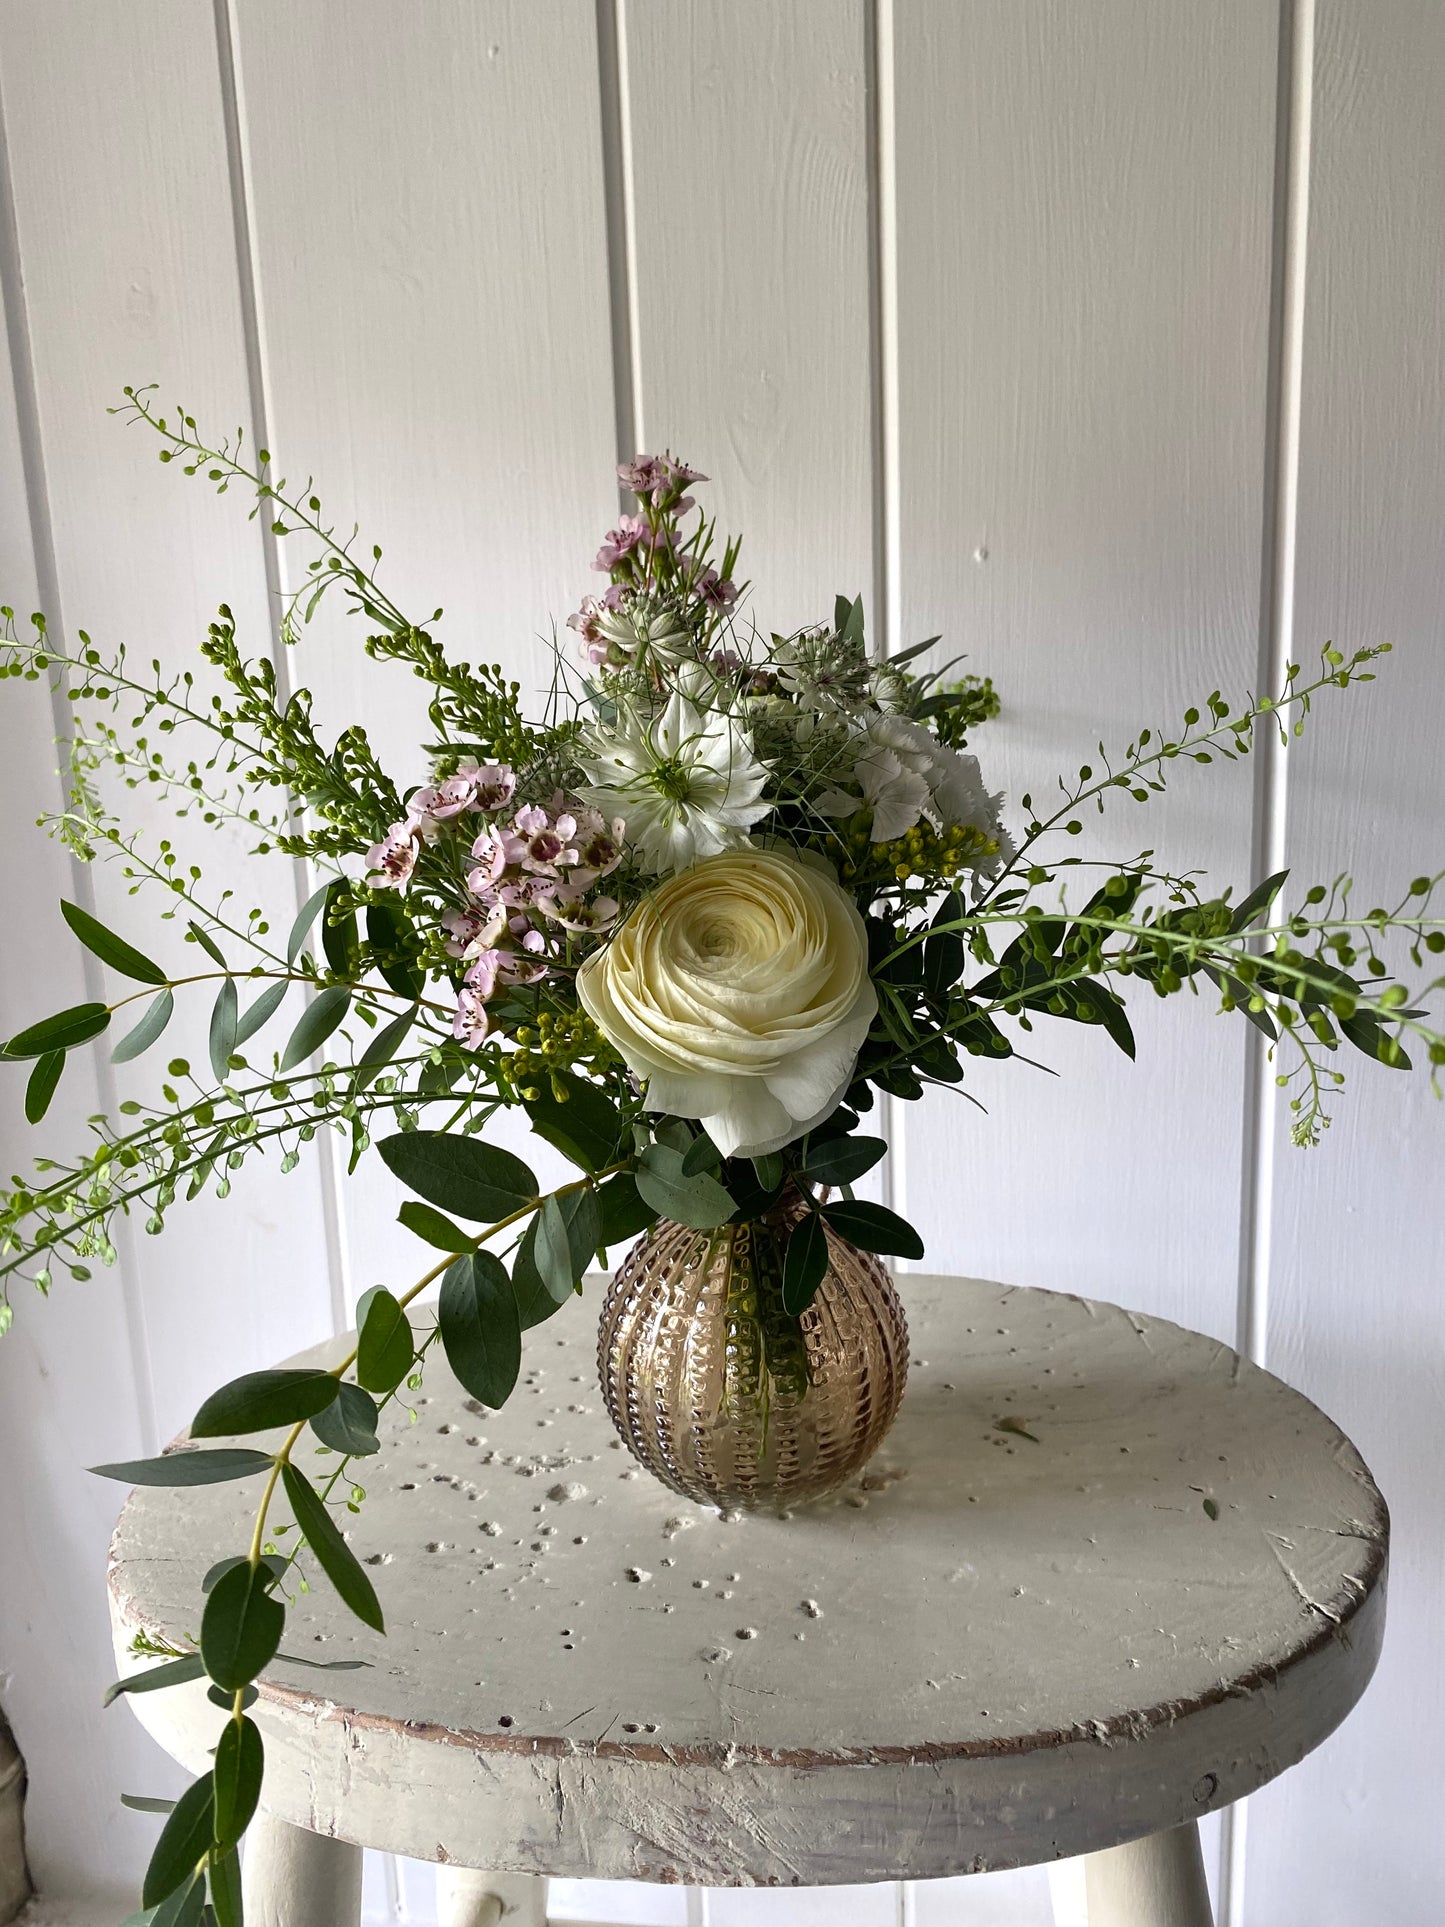 Topaz Urchin Glass Bud Vase Bowl - including a posy of seasonal flowers